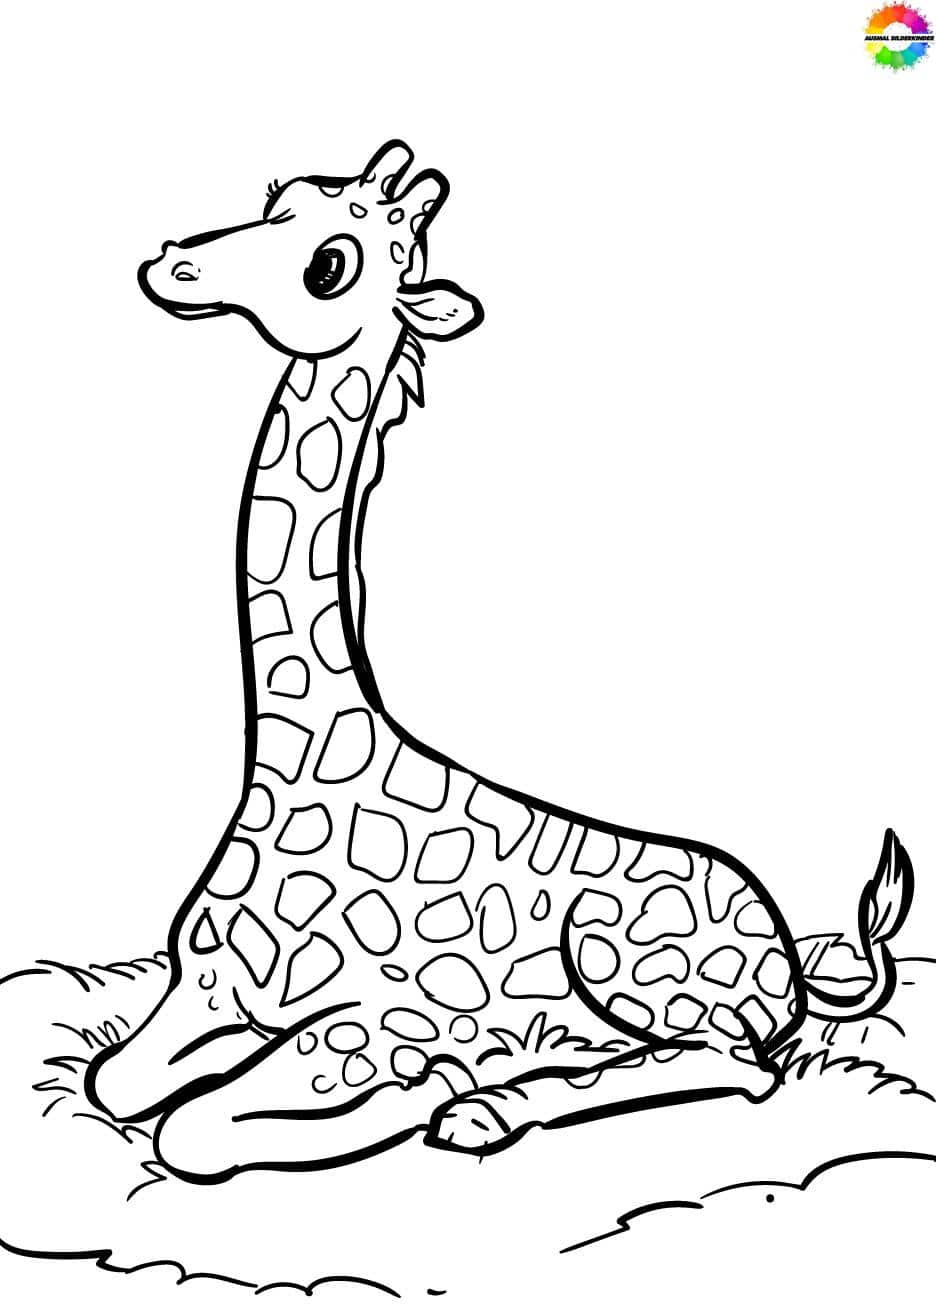 Giraffe-Ausmalbilder-ausmalbilderkinder.de-15